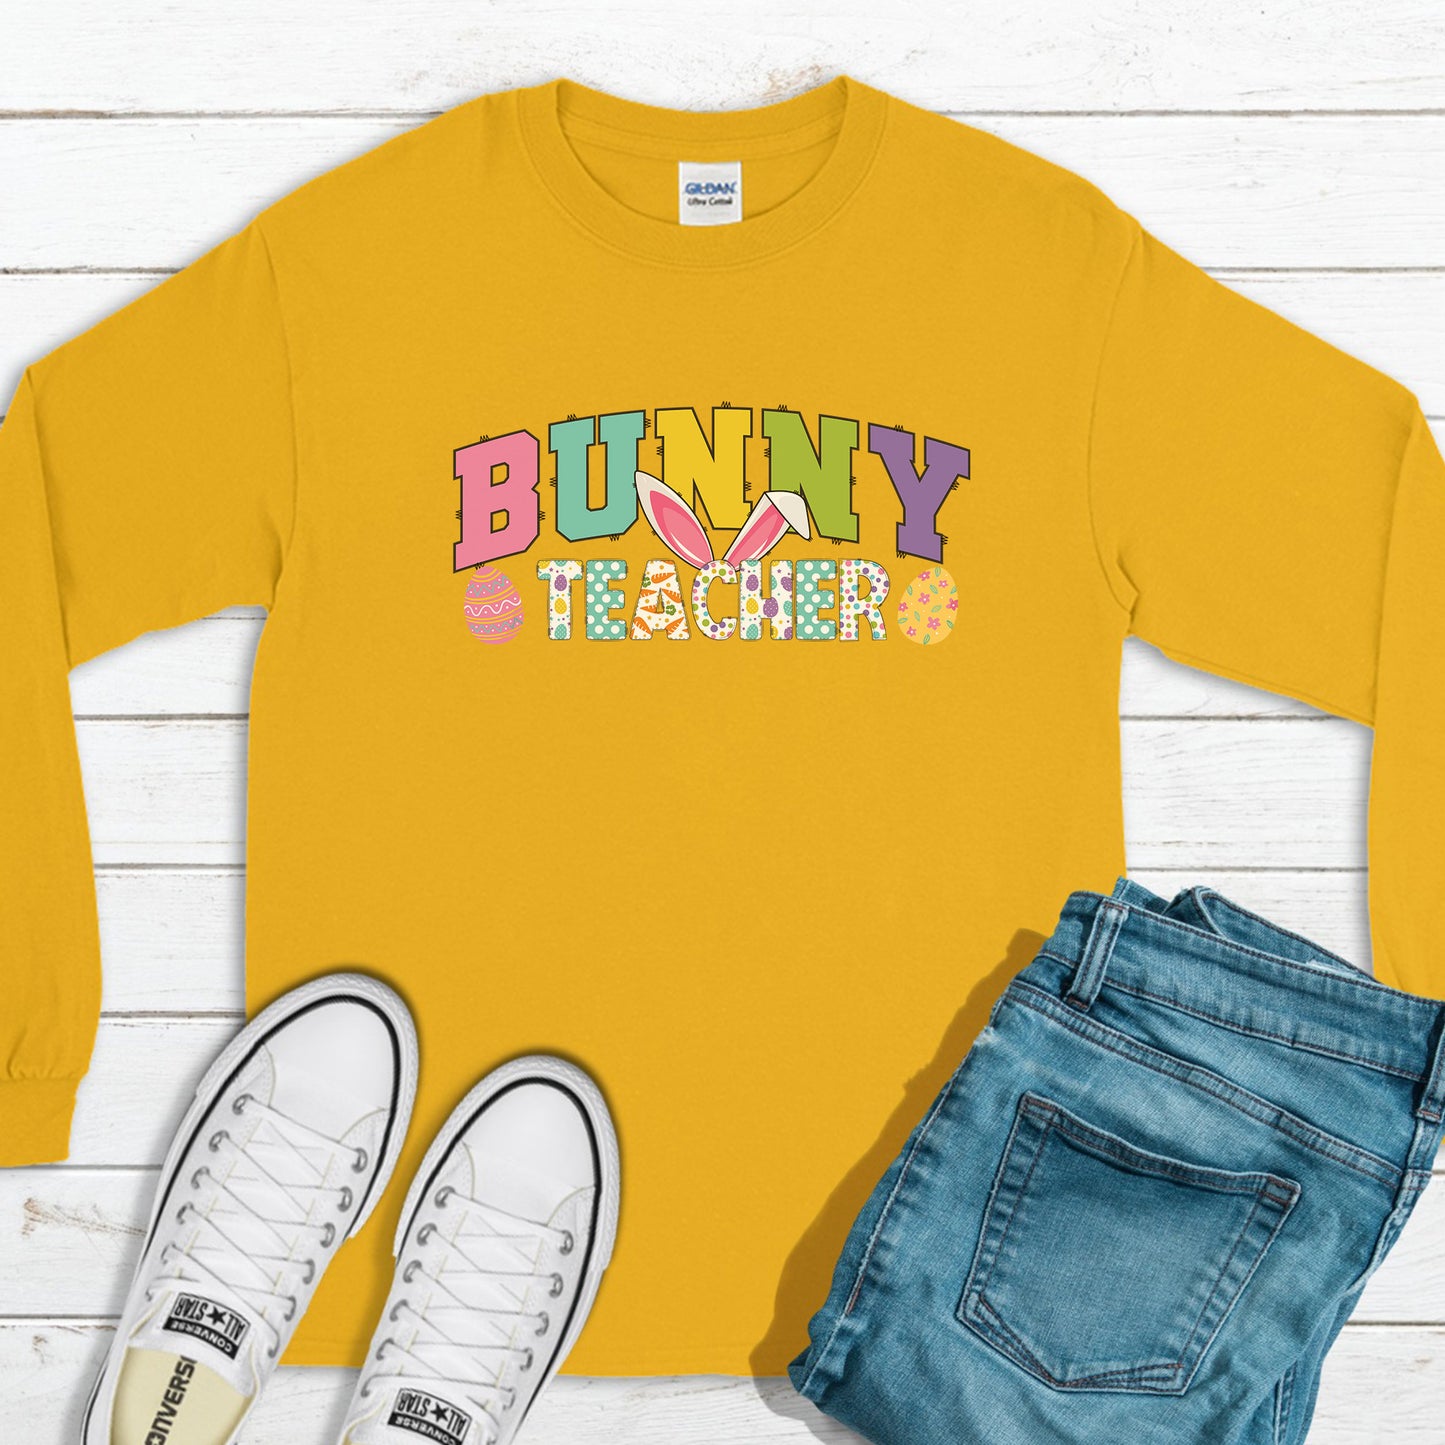 Bunny Teacher Sweatshirt, Easter Outfit, Happy Easter Sweatshirt, Easter Bunny Sweatshirt, Teacher Sweatshirt